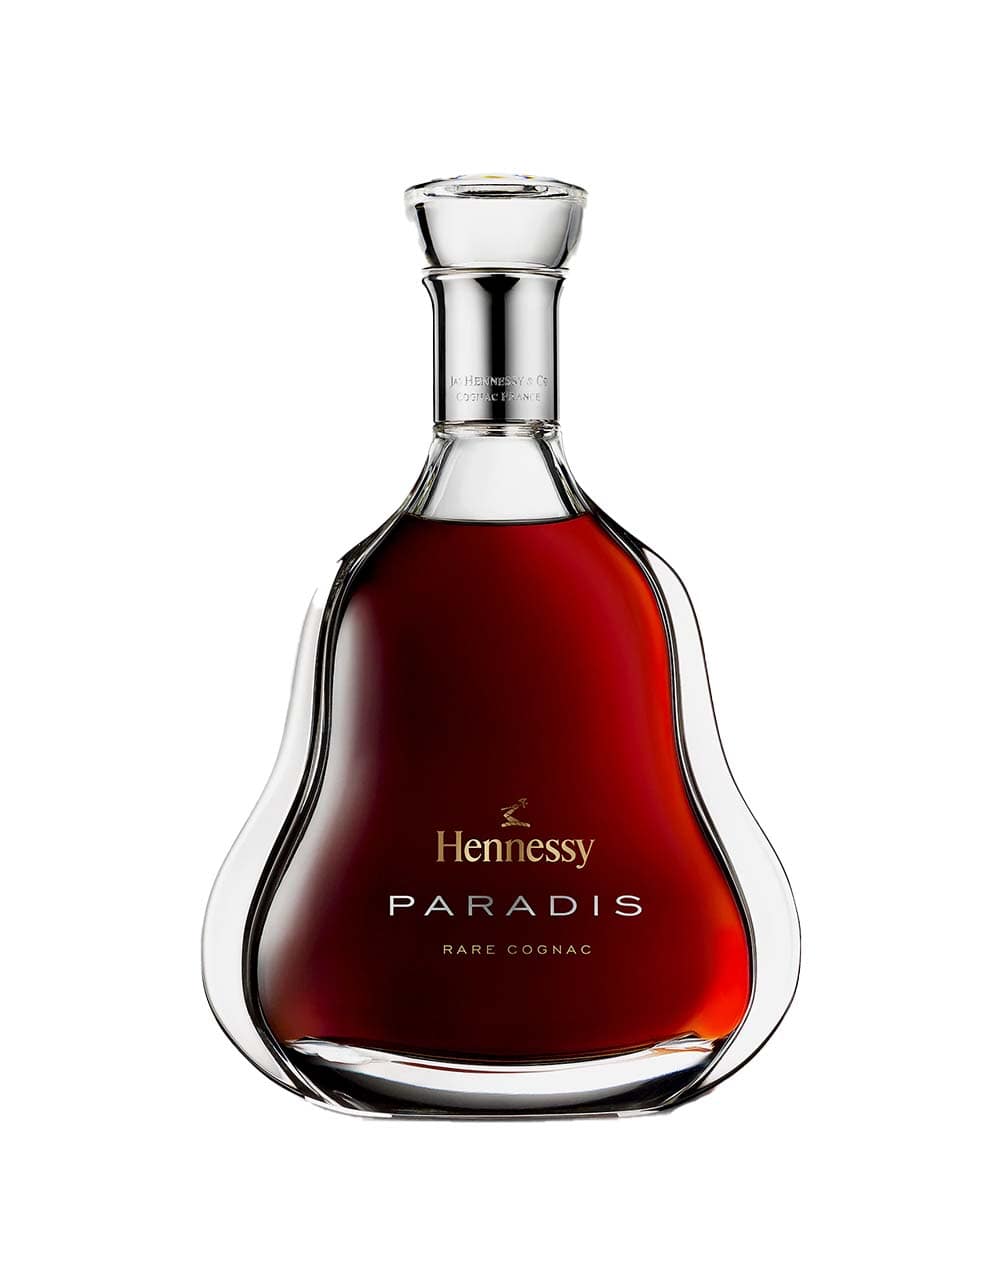 Hennessy Paradis Cognac: Experience the Taste!